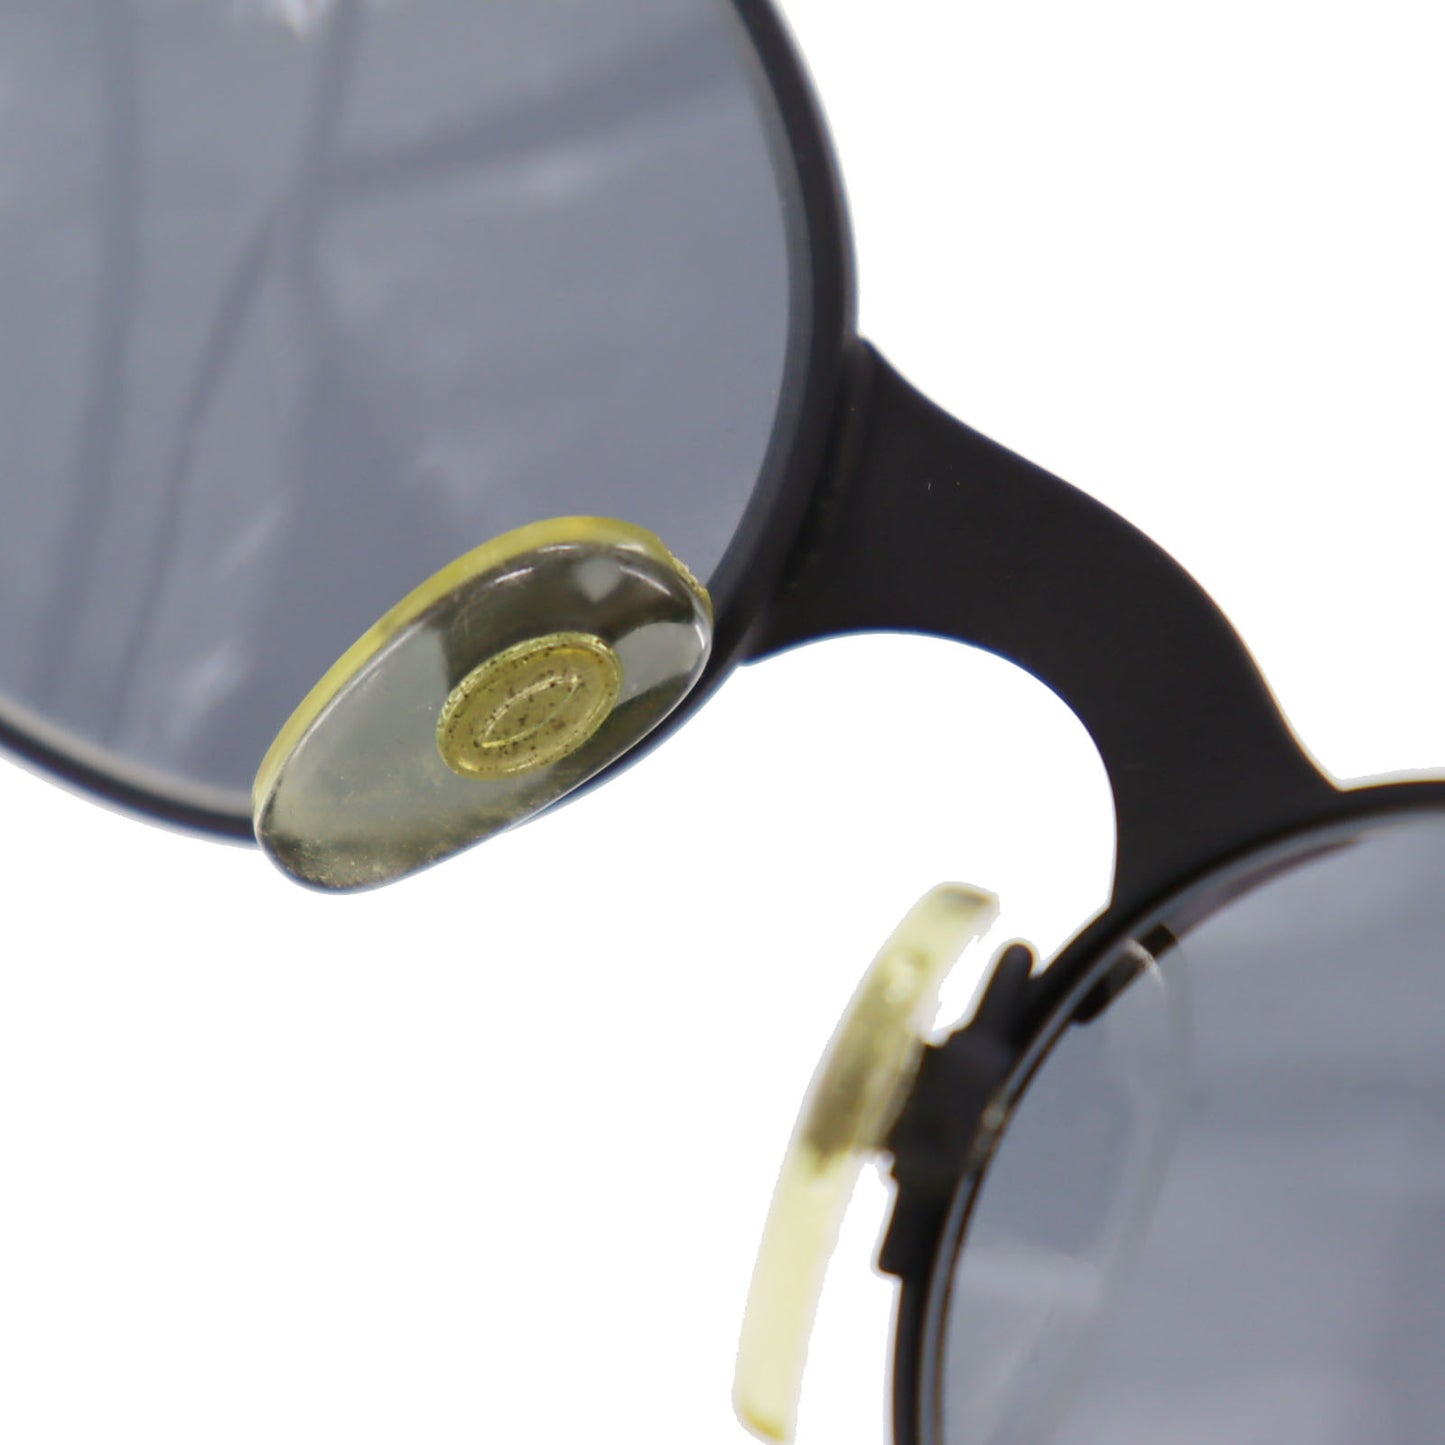 CHANEL Logos Sunglasses Mat Black Eye Wear #CP927